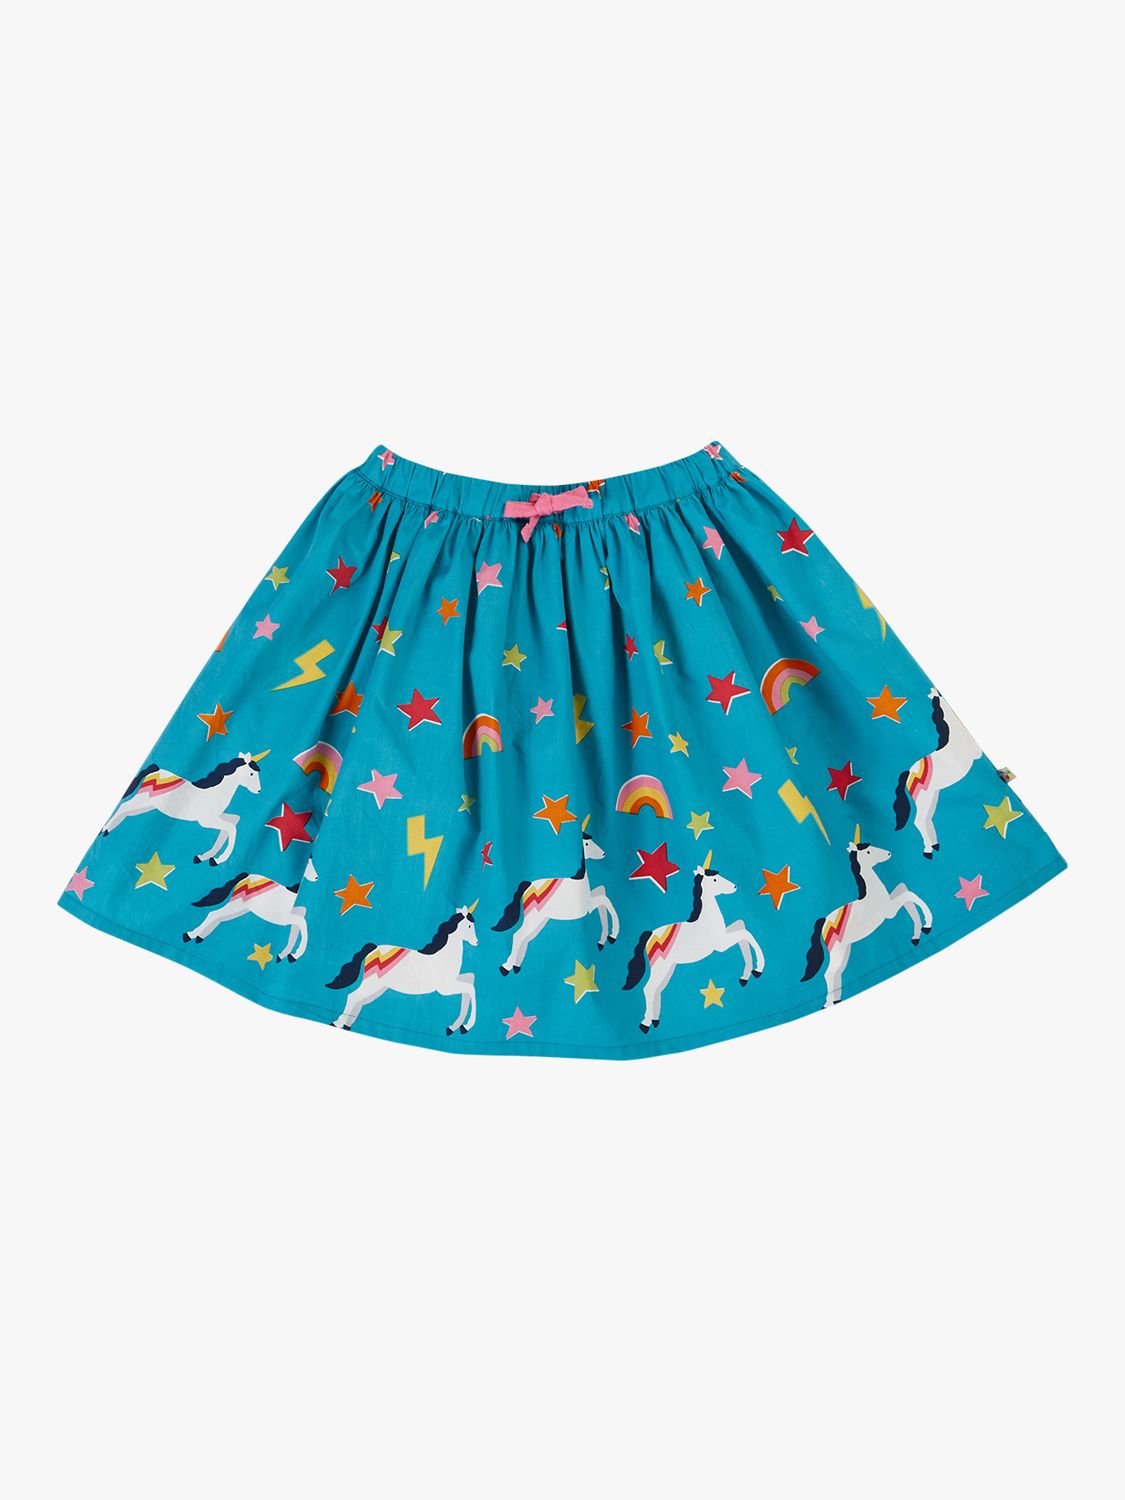 Frugi Kids' Twirly Dream Skirt, Camper Blue at John Lewis & Partners